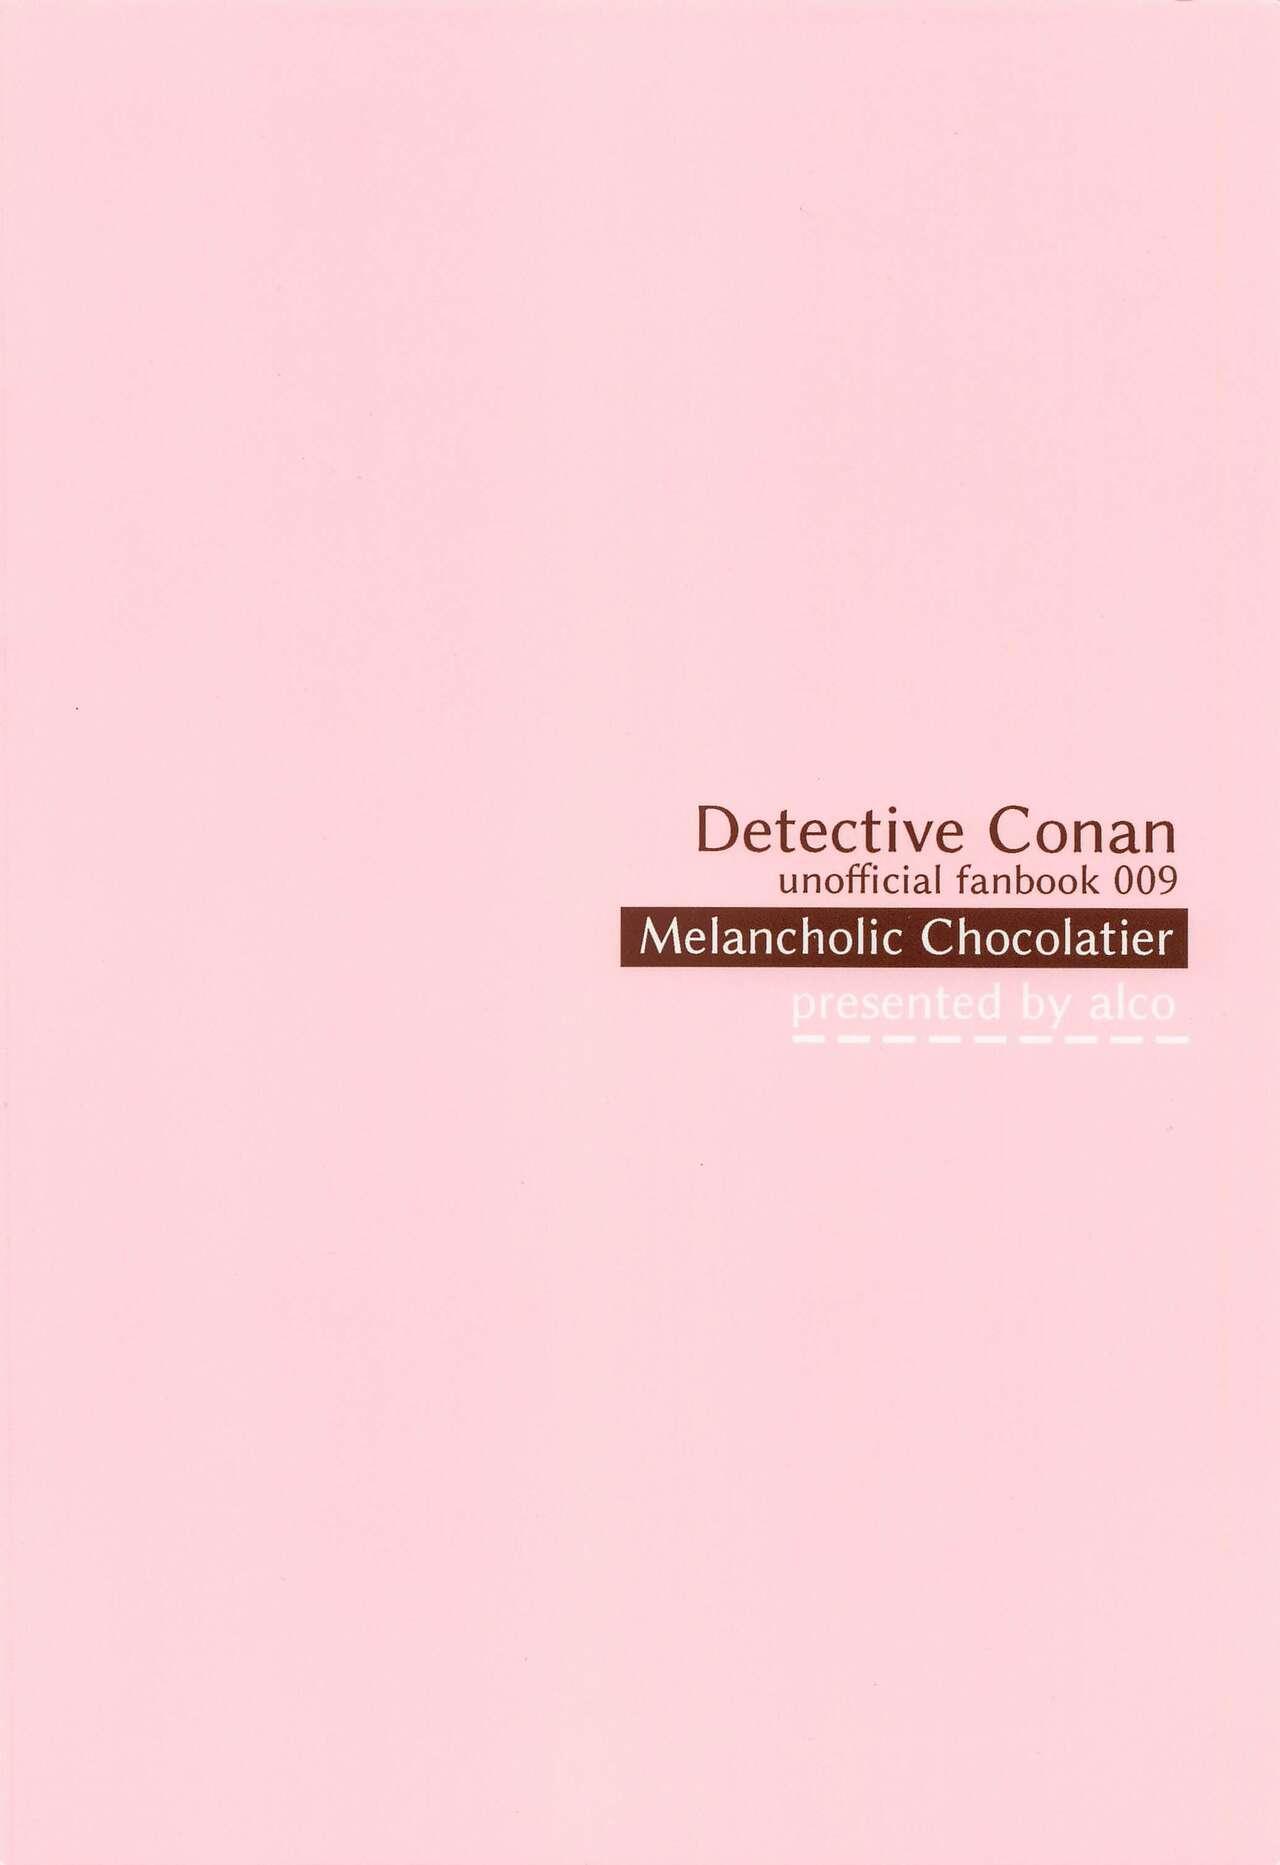 Melancholic Chocolatier 41